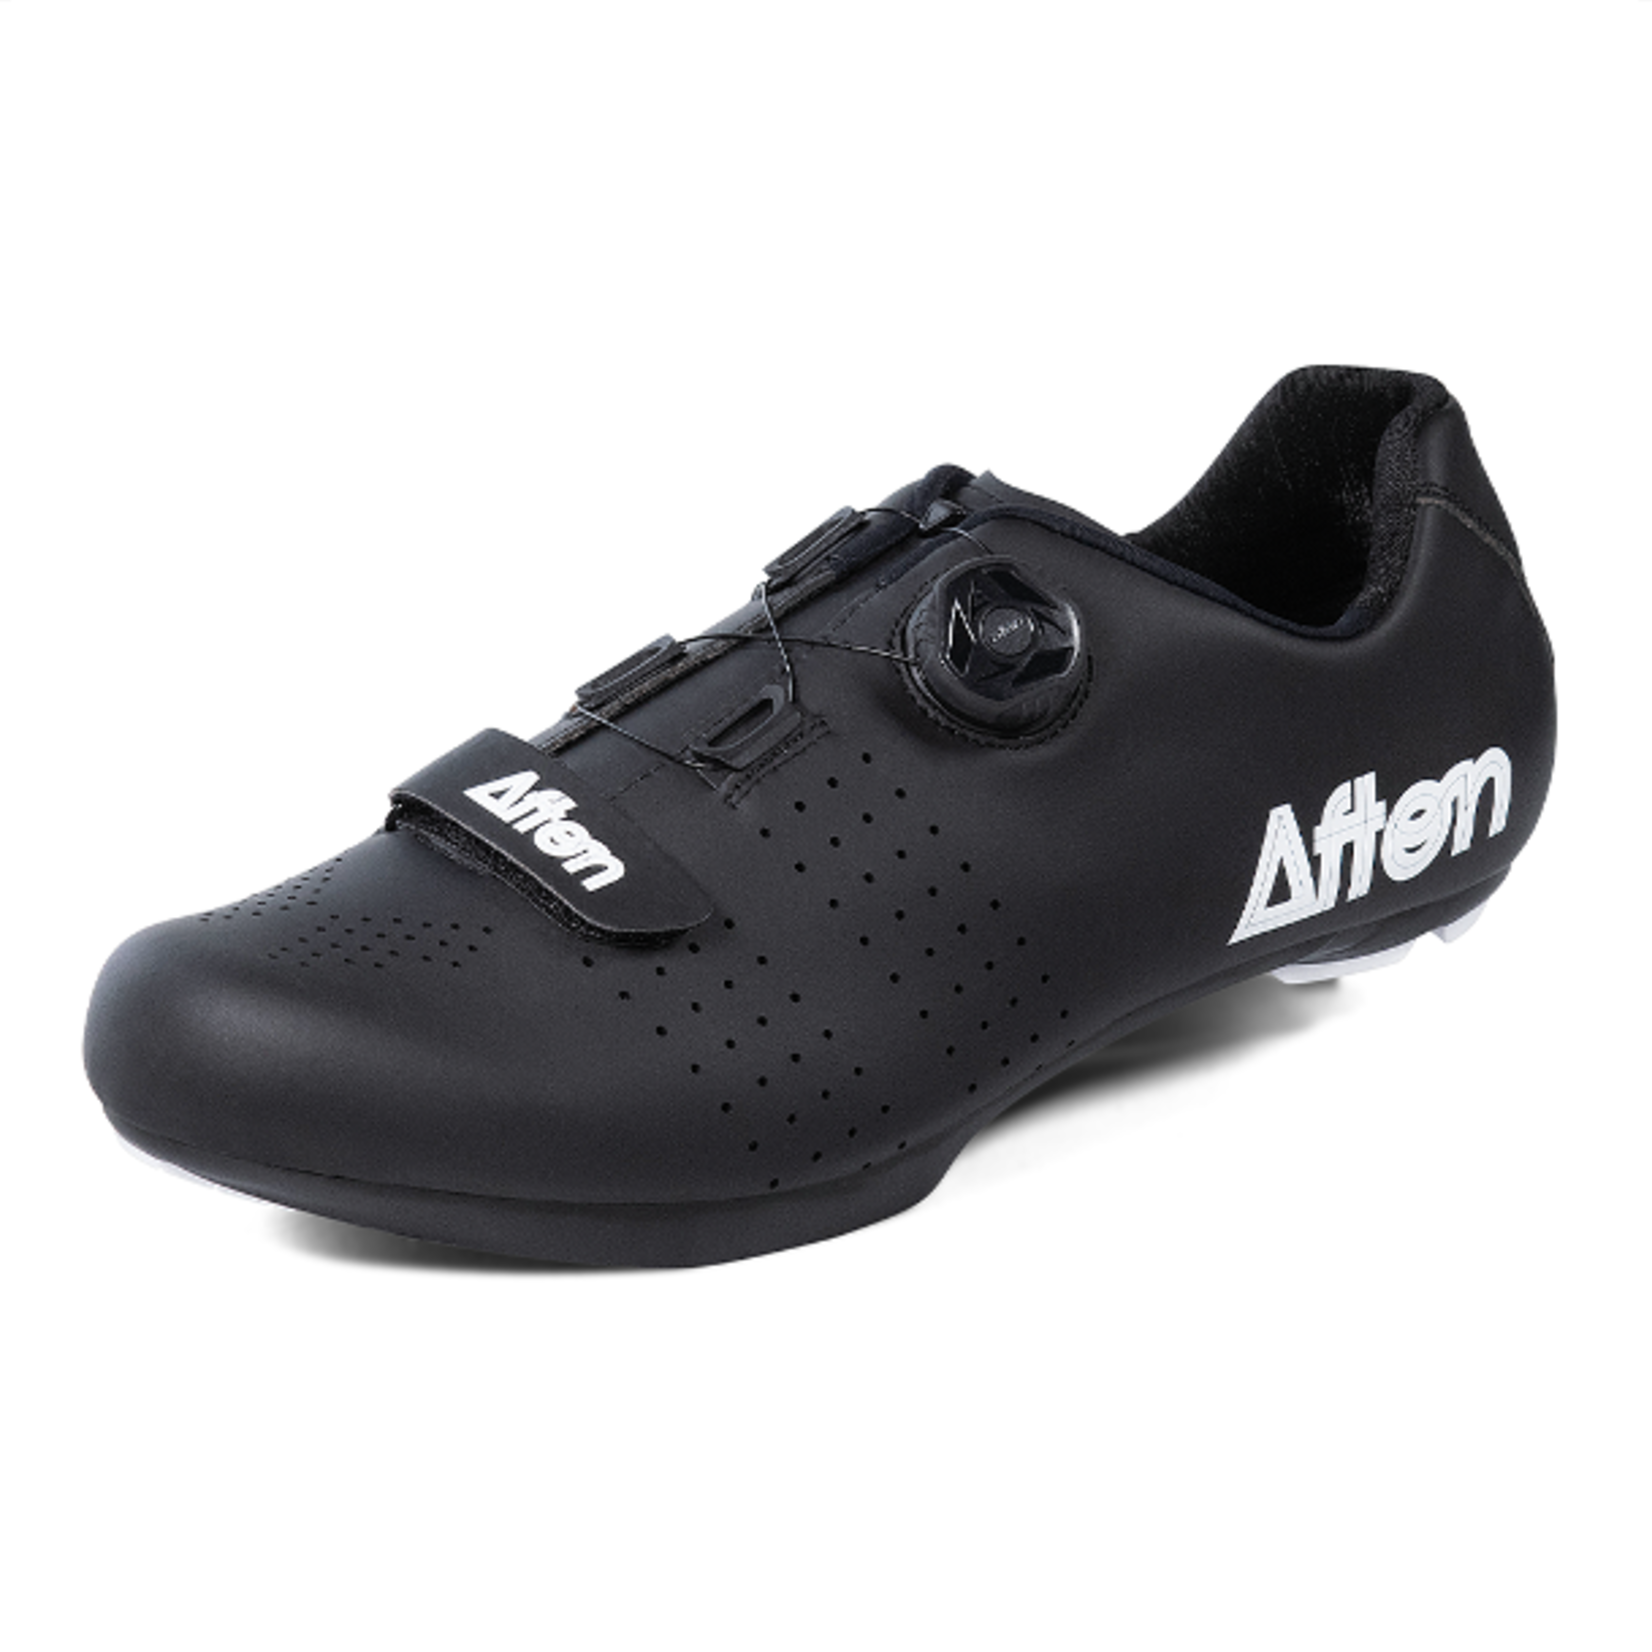 AFTON Gravel Shoes - ROYCE - Black/White, Size 48